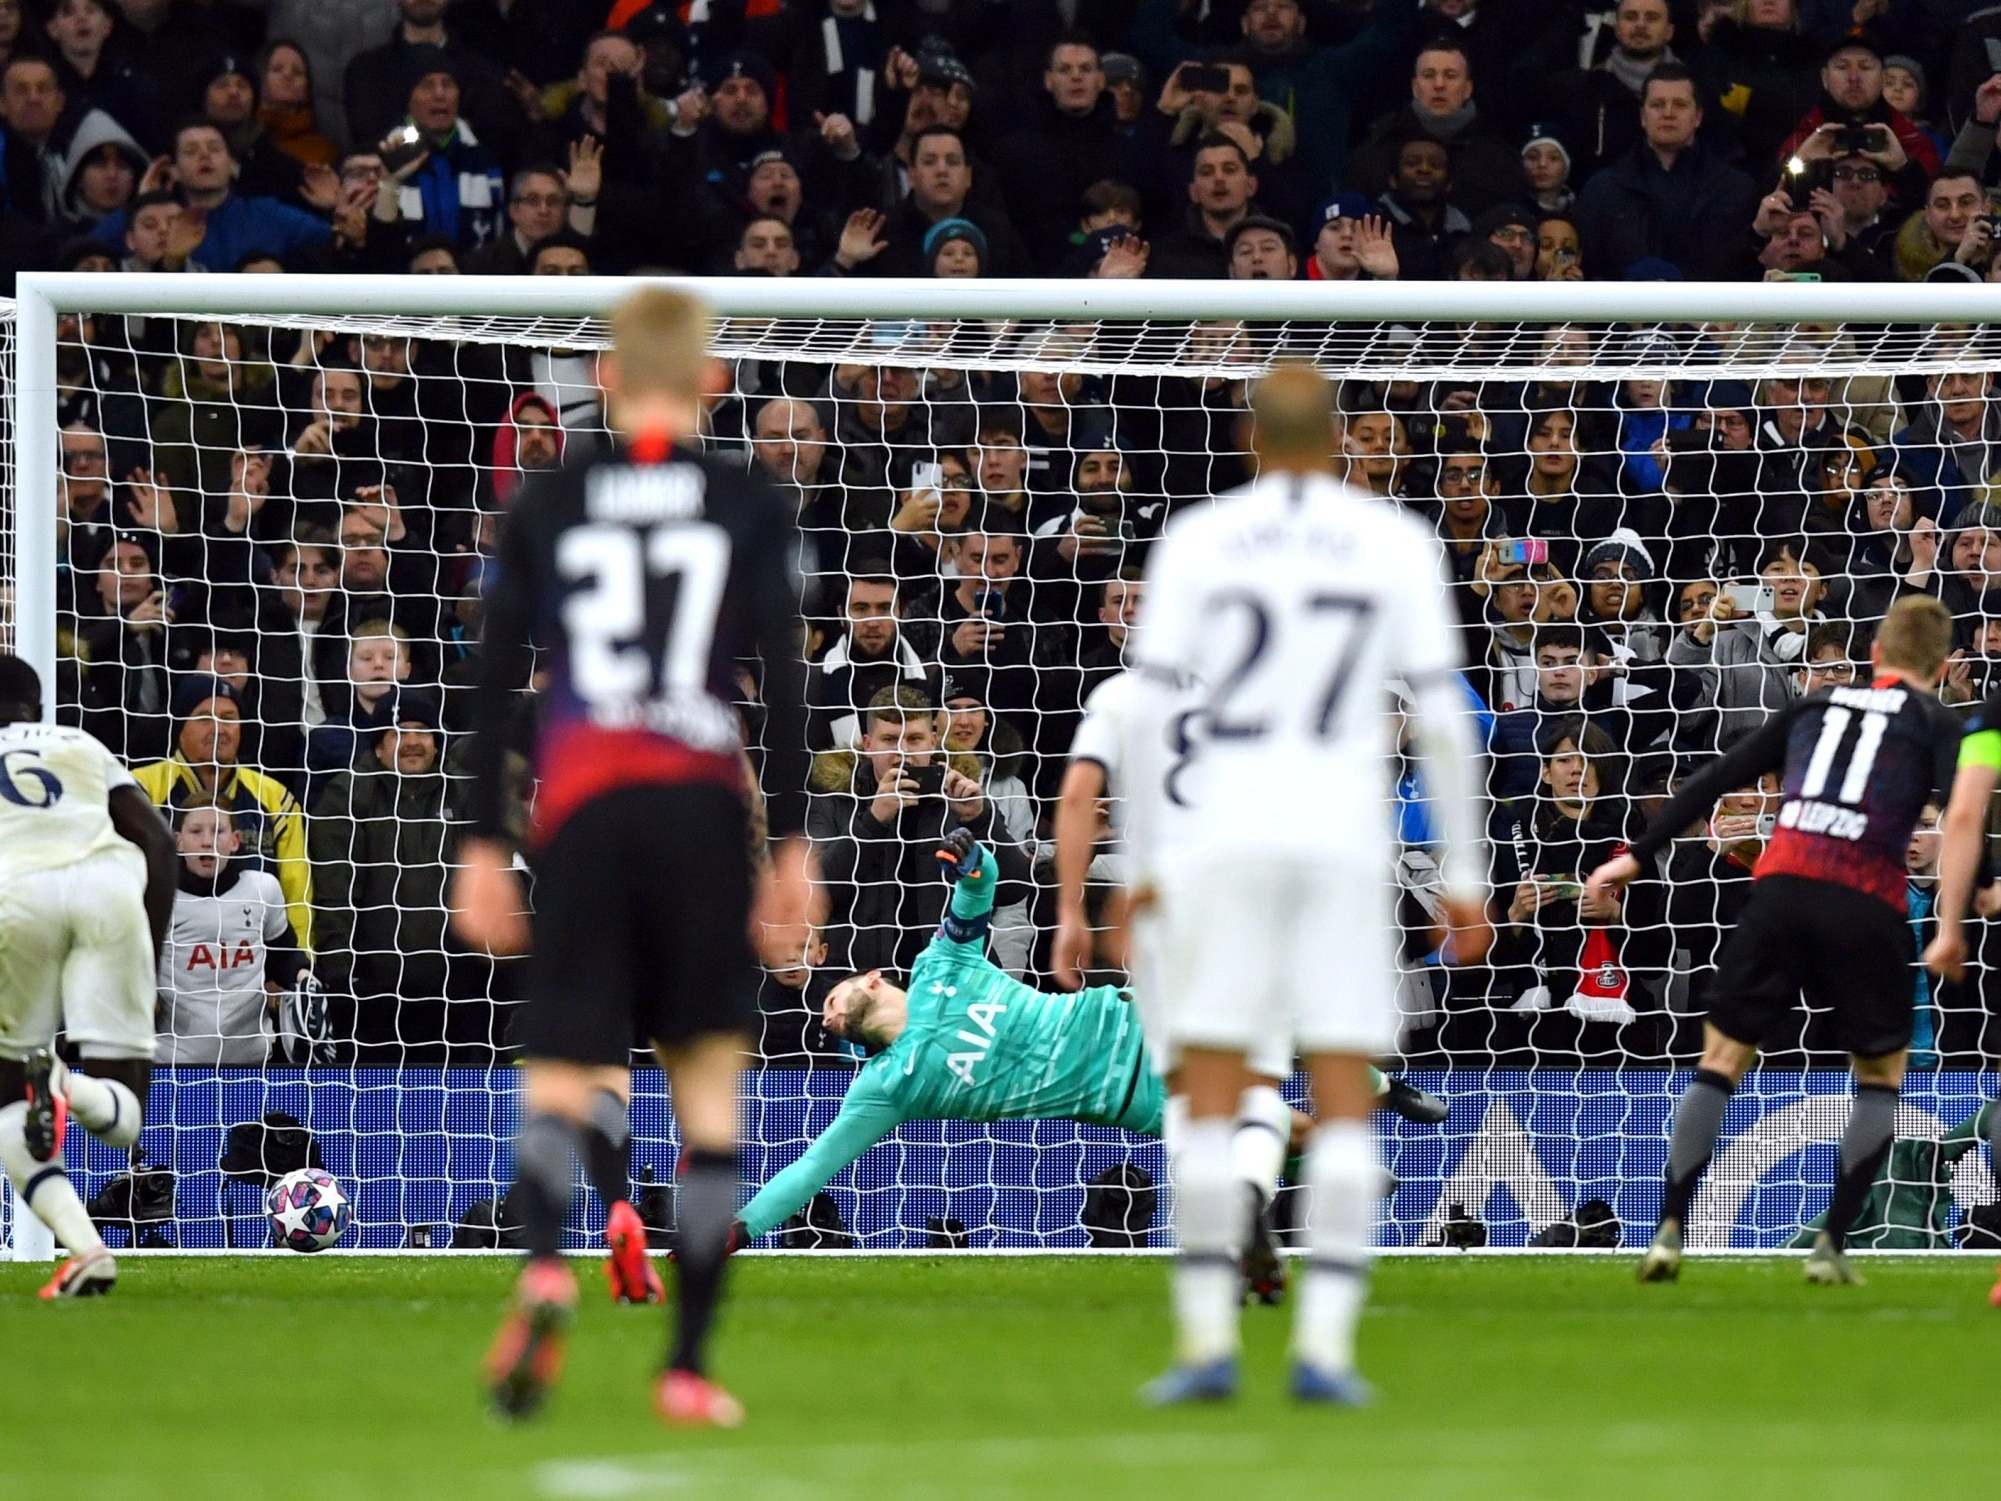 Timo Werner fires his penalty past Spurs goalkeeper Hugo Lloris